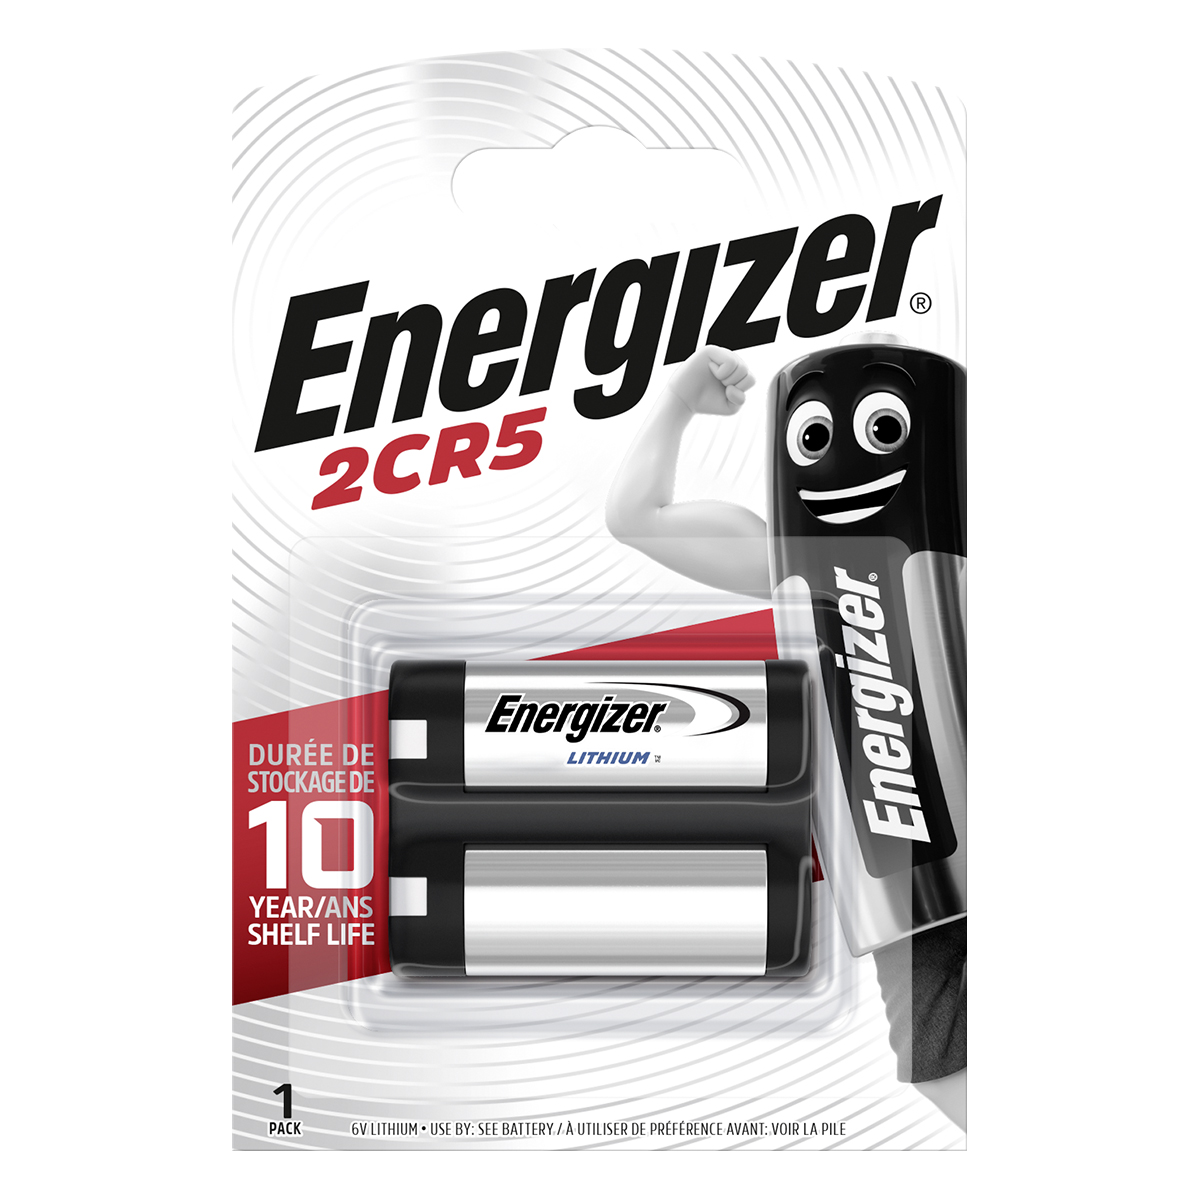 Energizer 1er Blister Foto-Batterie 6 Volt Lithium 2CR5